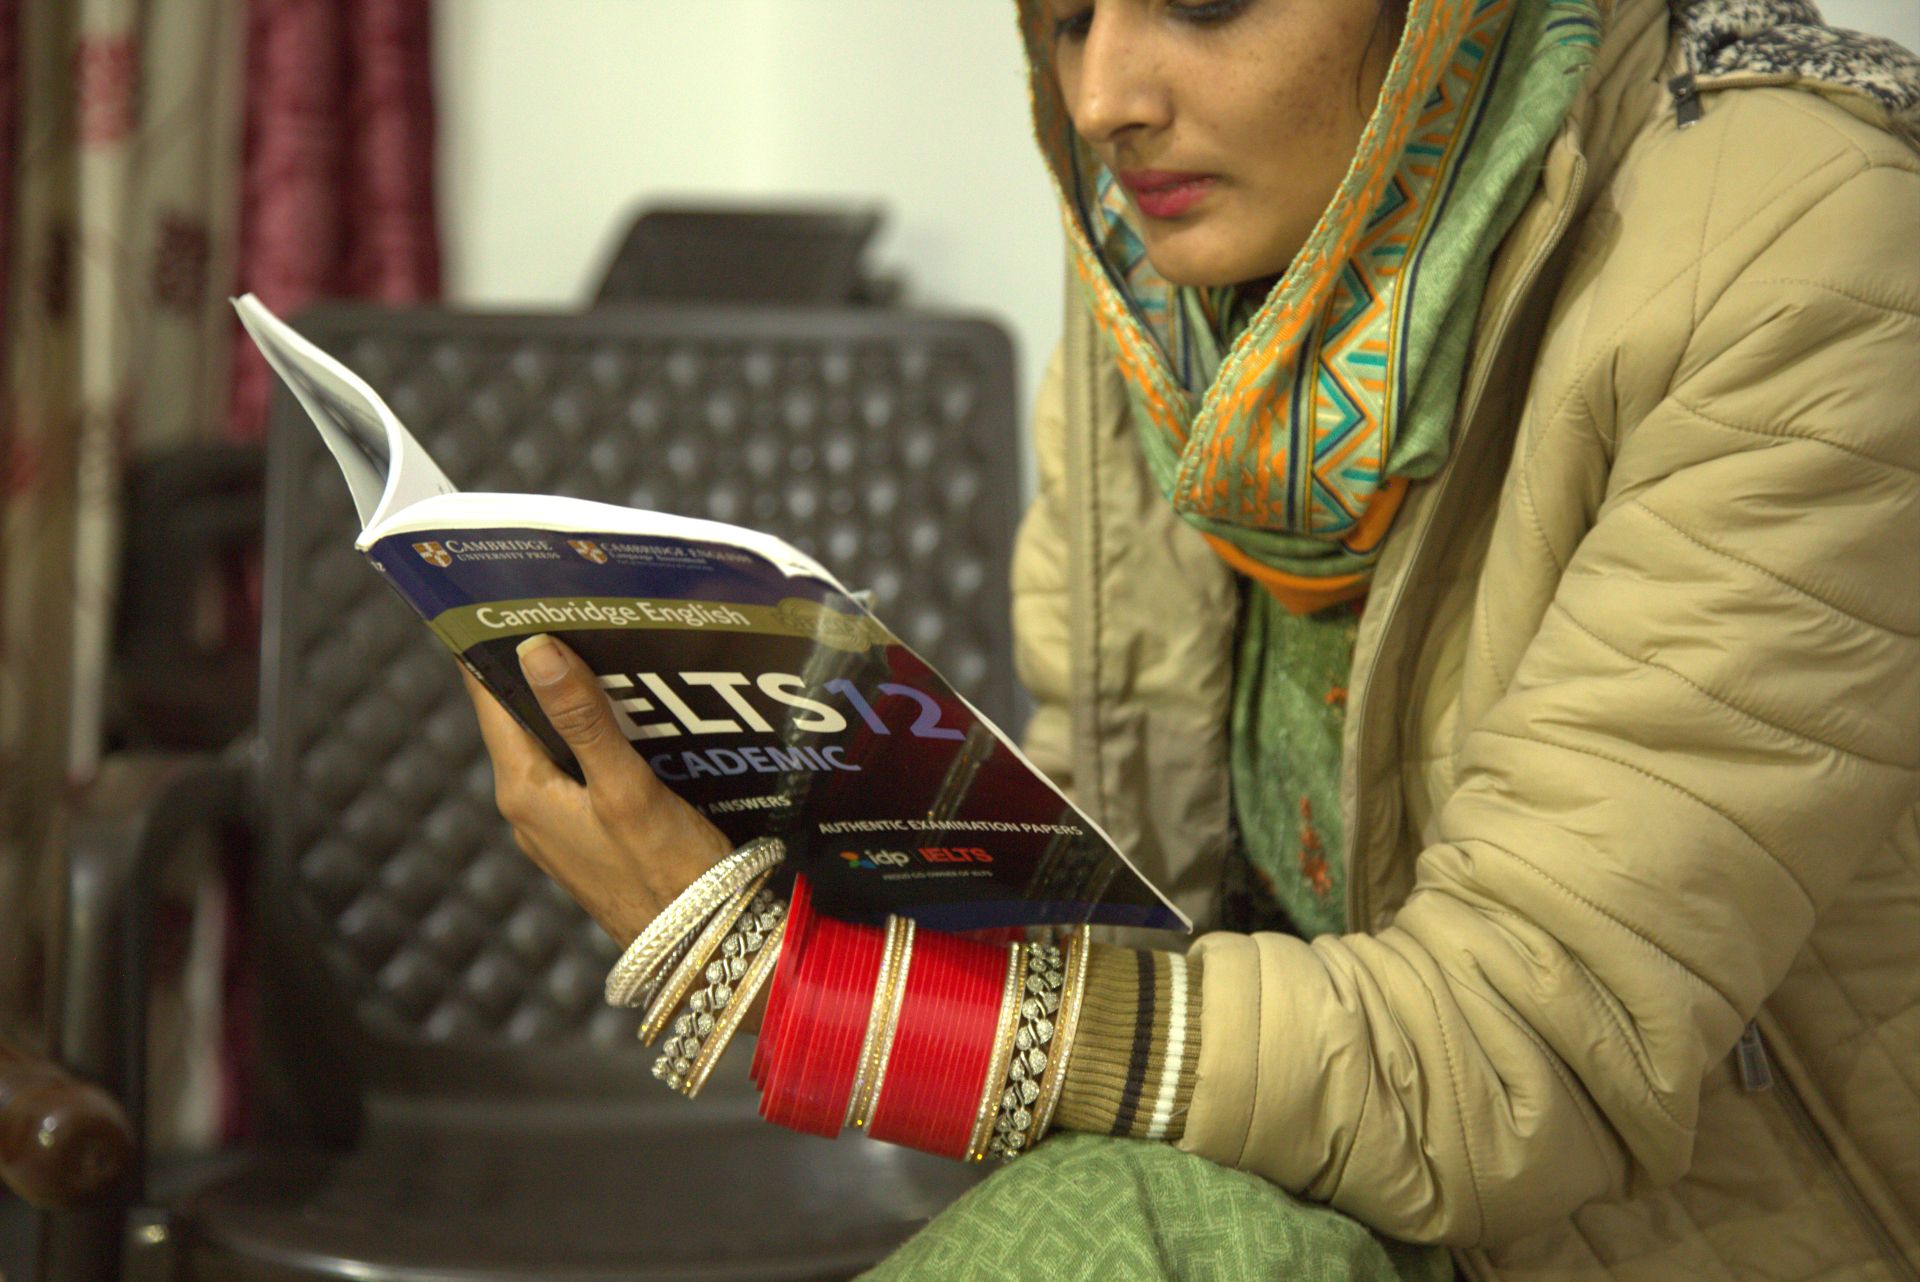 Punjabi Women Are Gaining Leverage in the Marriage Market Through Education